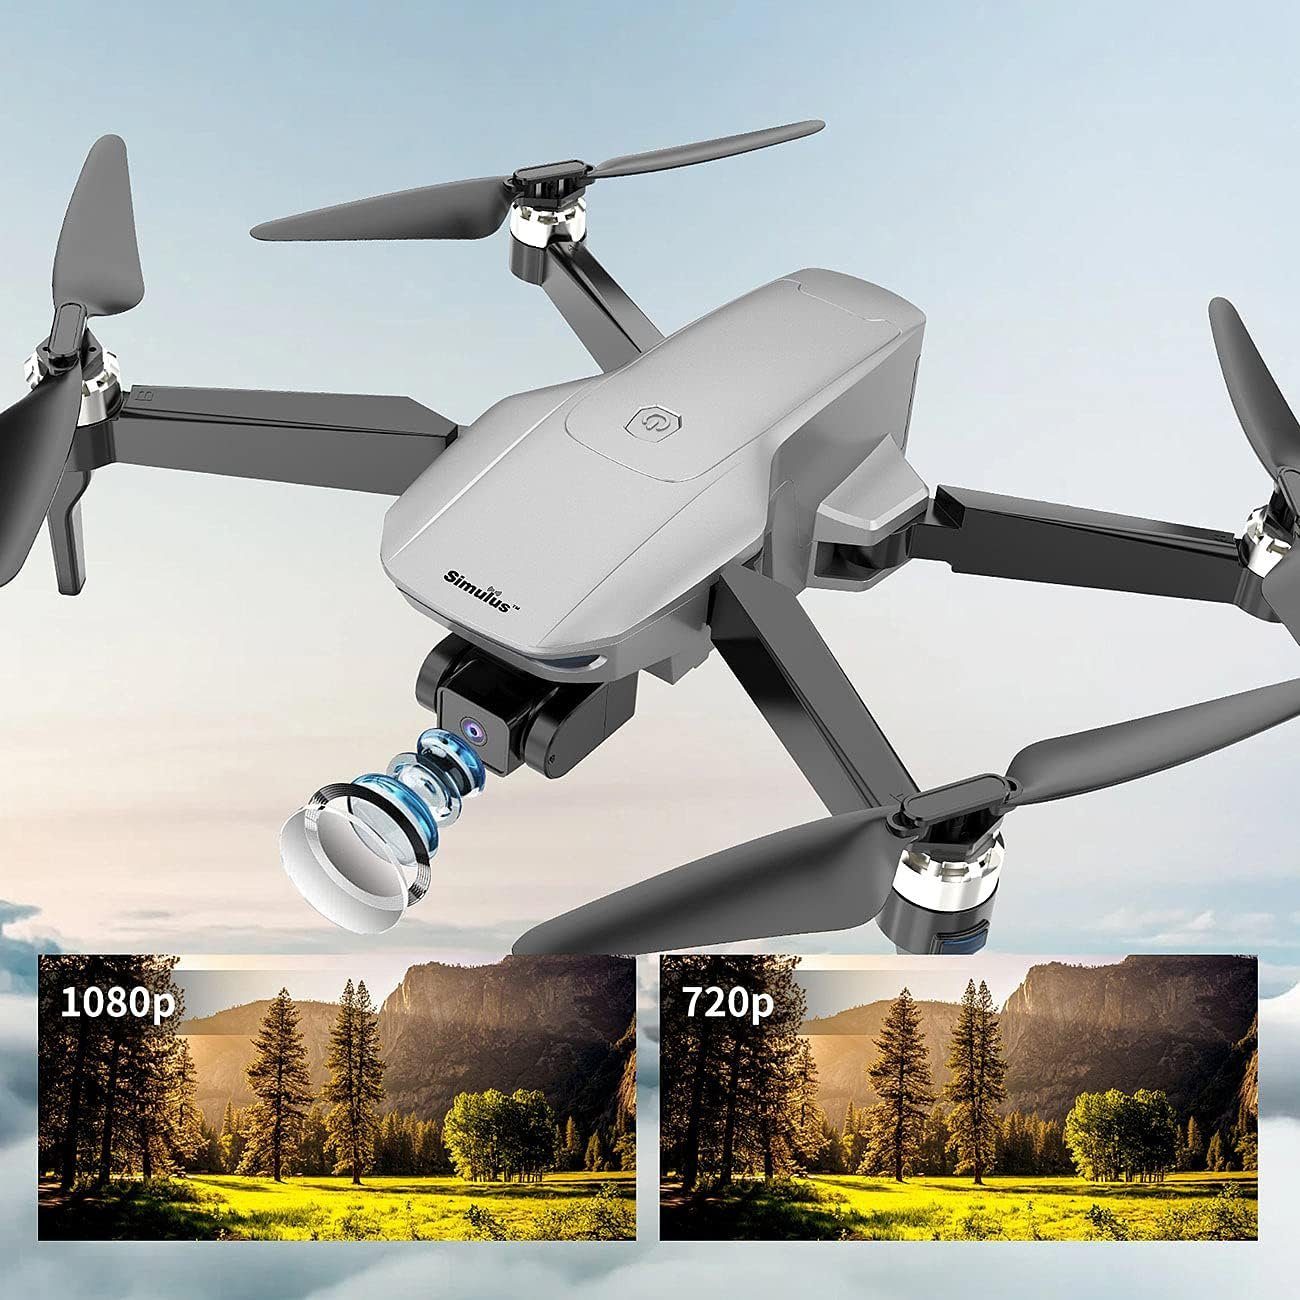 GPS-Drohne, Faltbare Brushless-Motor) Drone (4K, Simulus Drohne 4K-Cam -Abstandssensor,